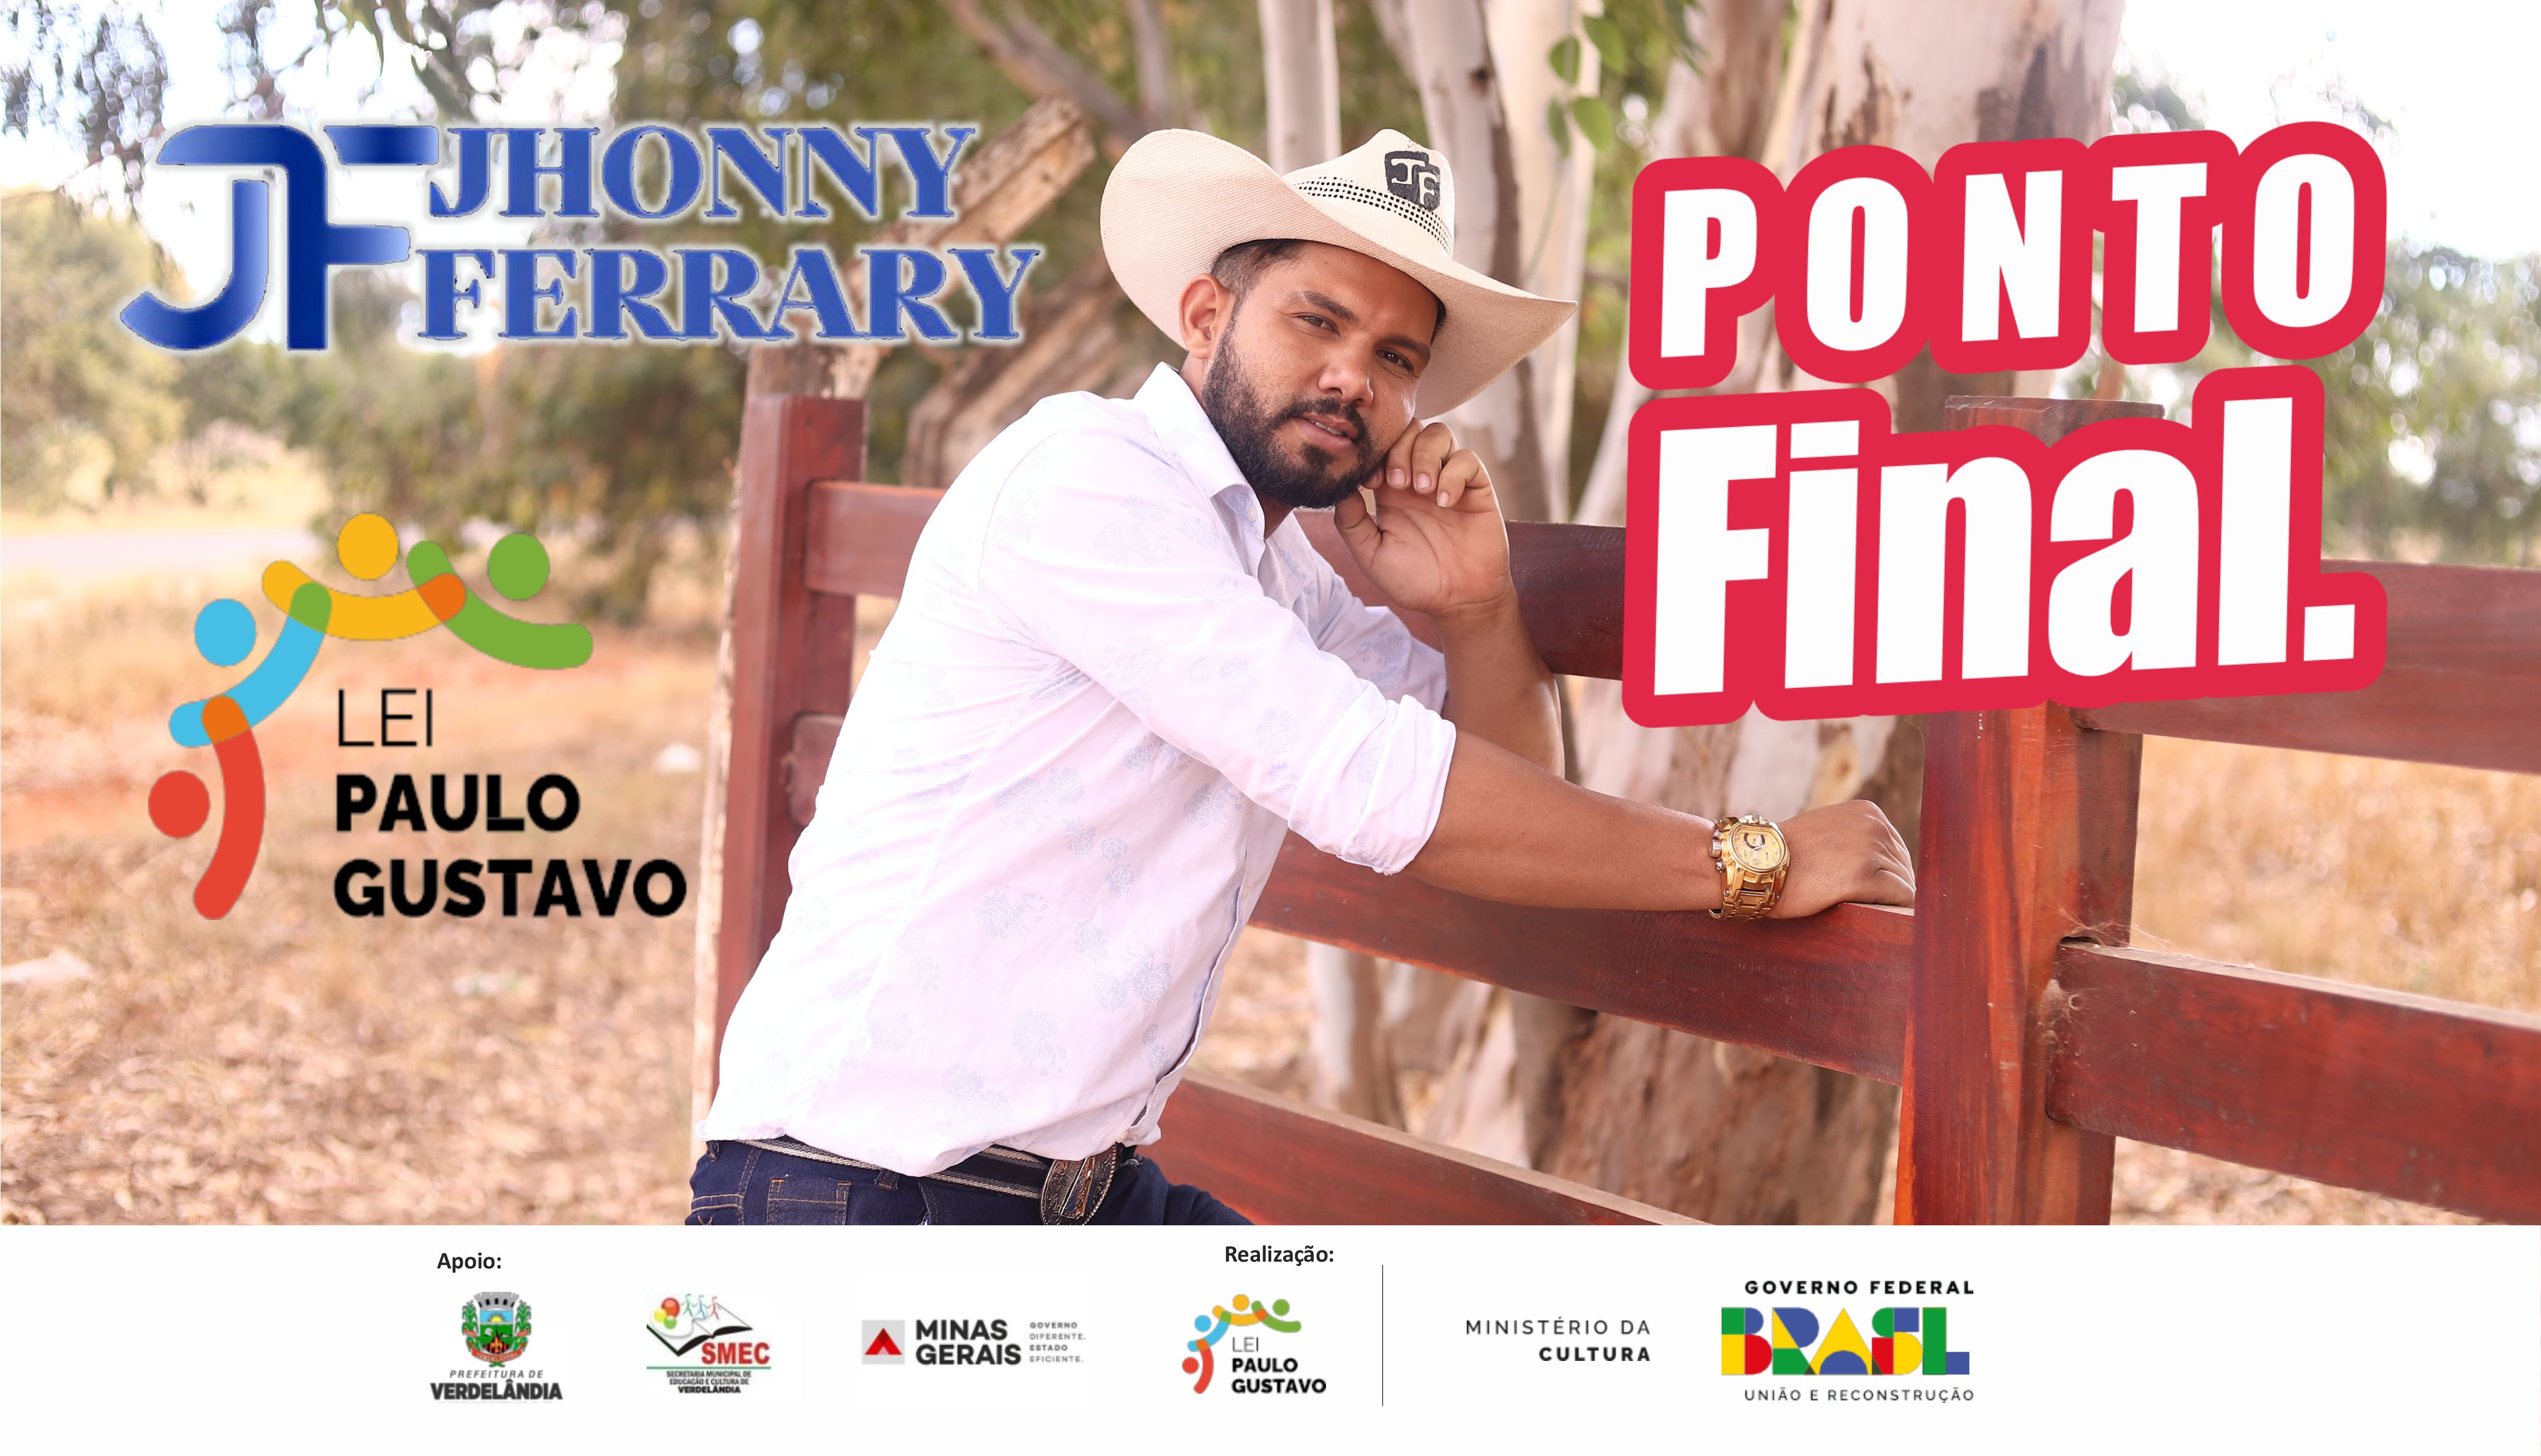 Ponto Final - Jhonny Ferrary - Lei Paulo Gustavo